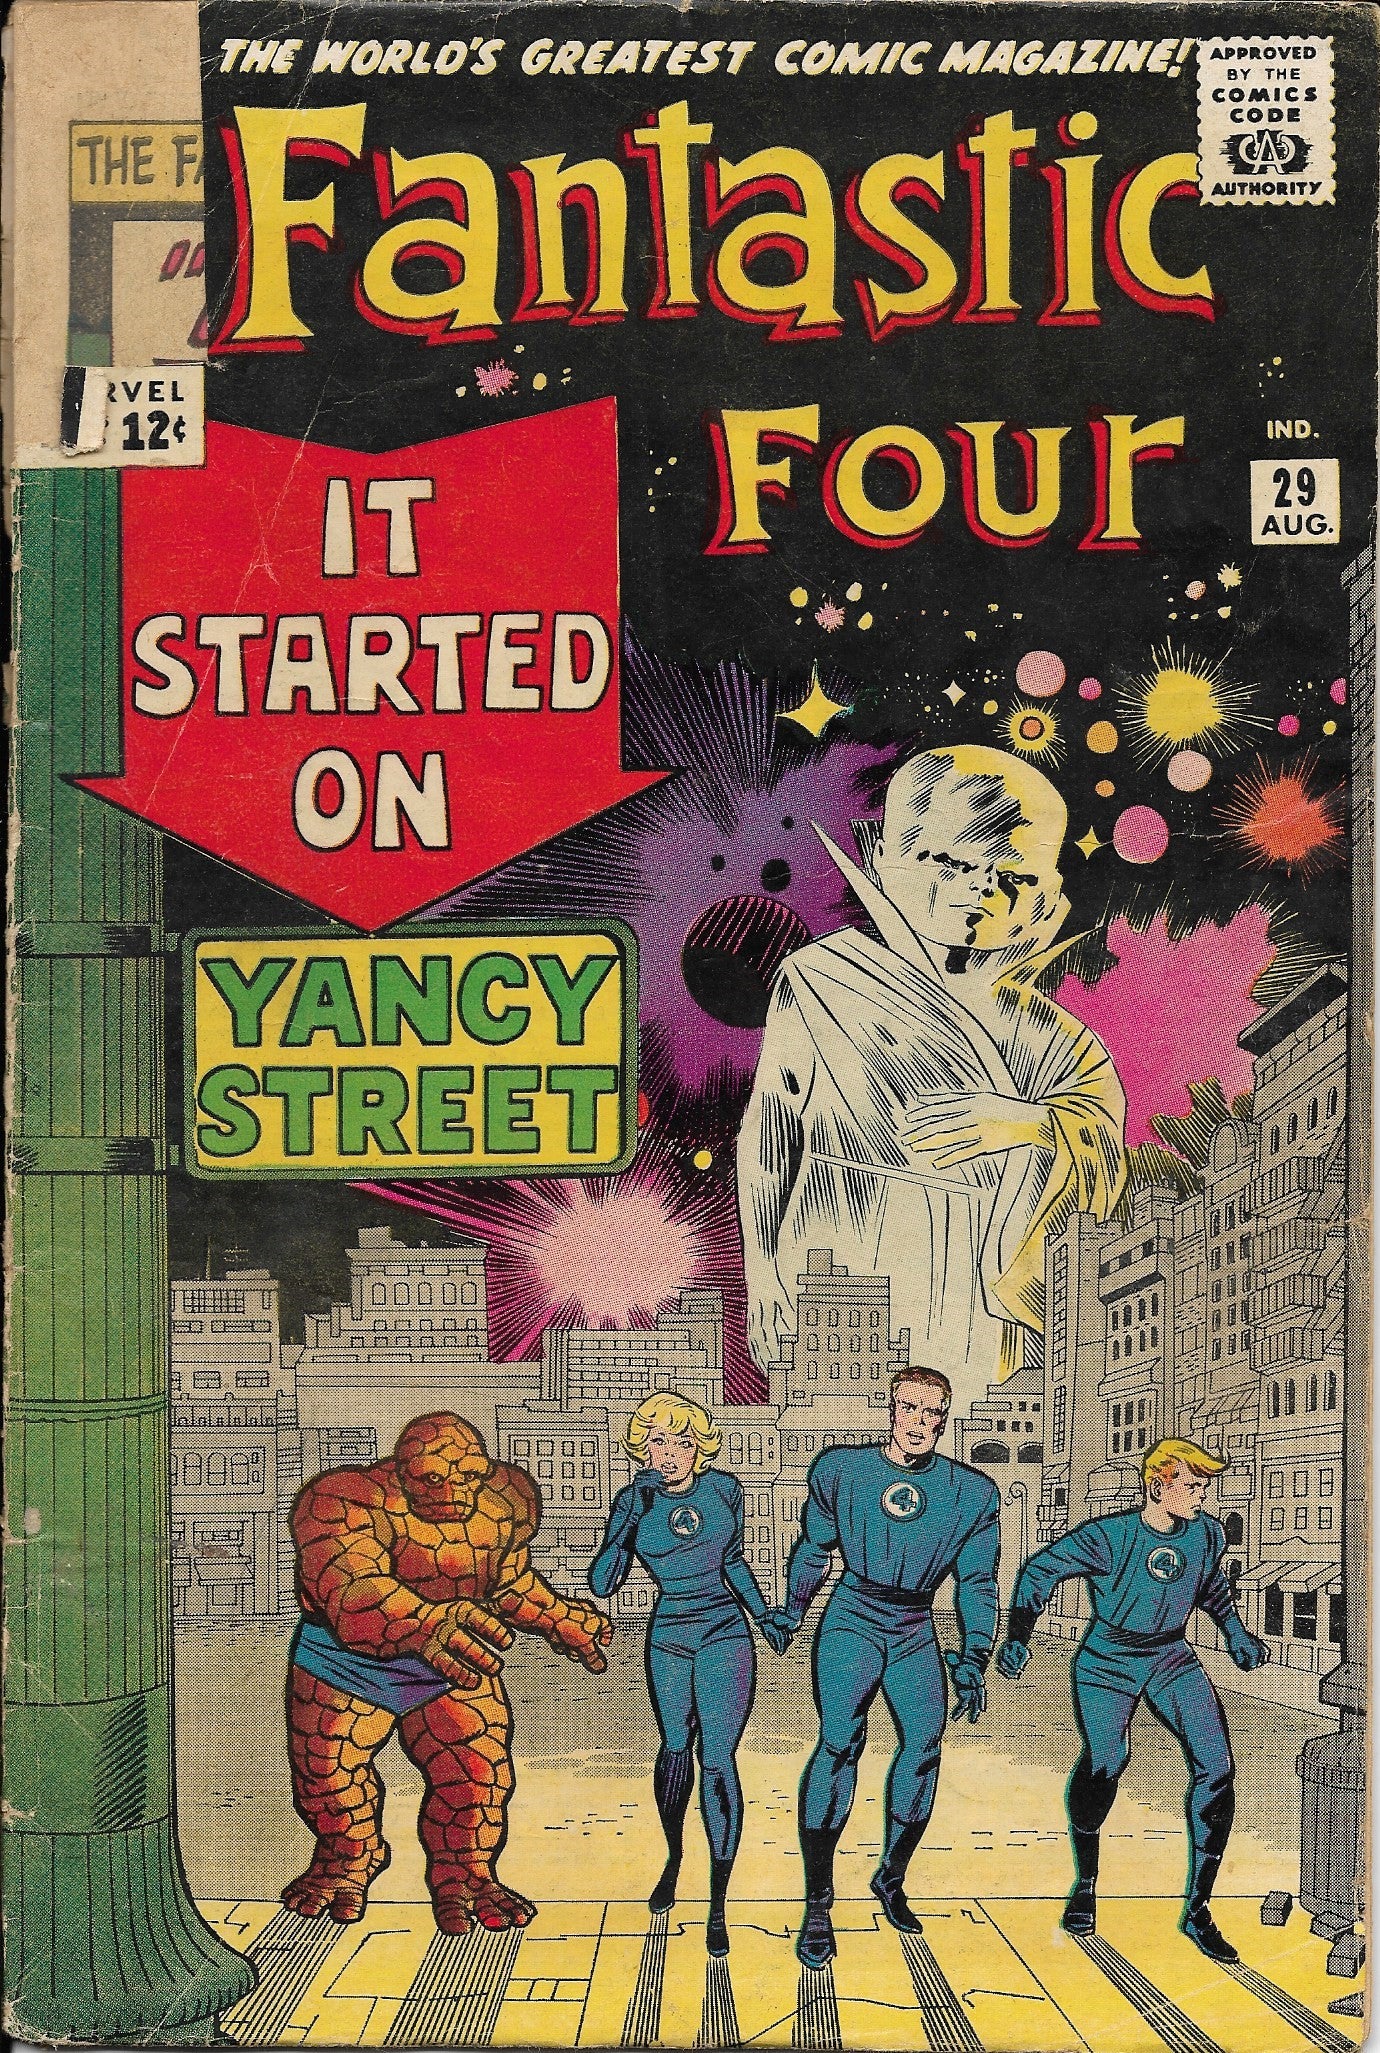 Fantastic Four No. 29, "It Started on Yancy Street," Marvel Comics, August 1964 - MISSING CORNER